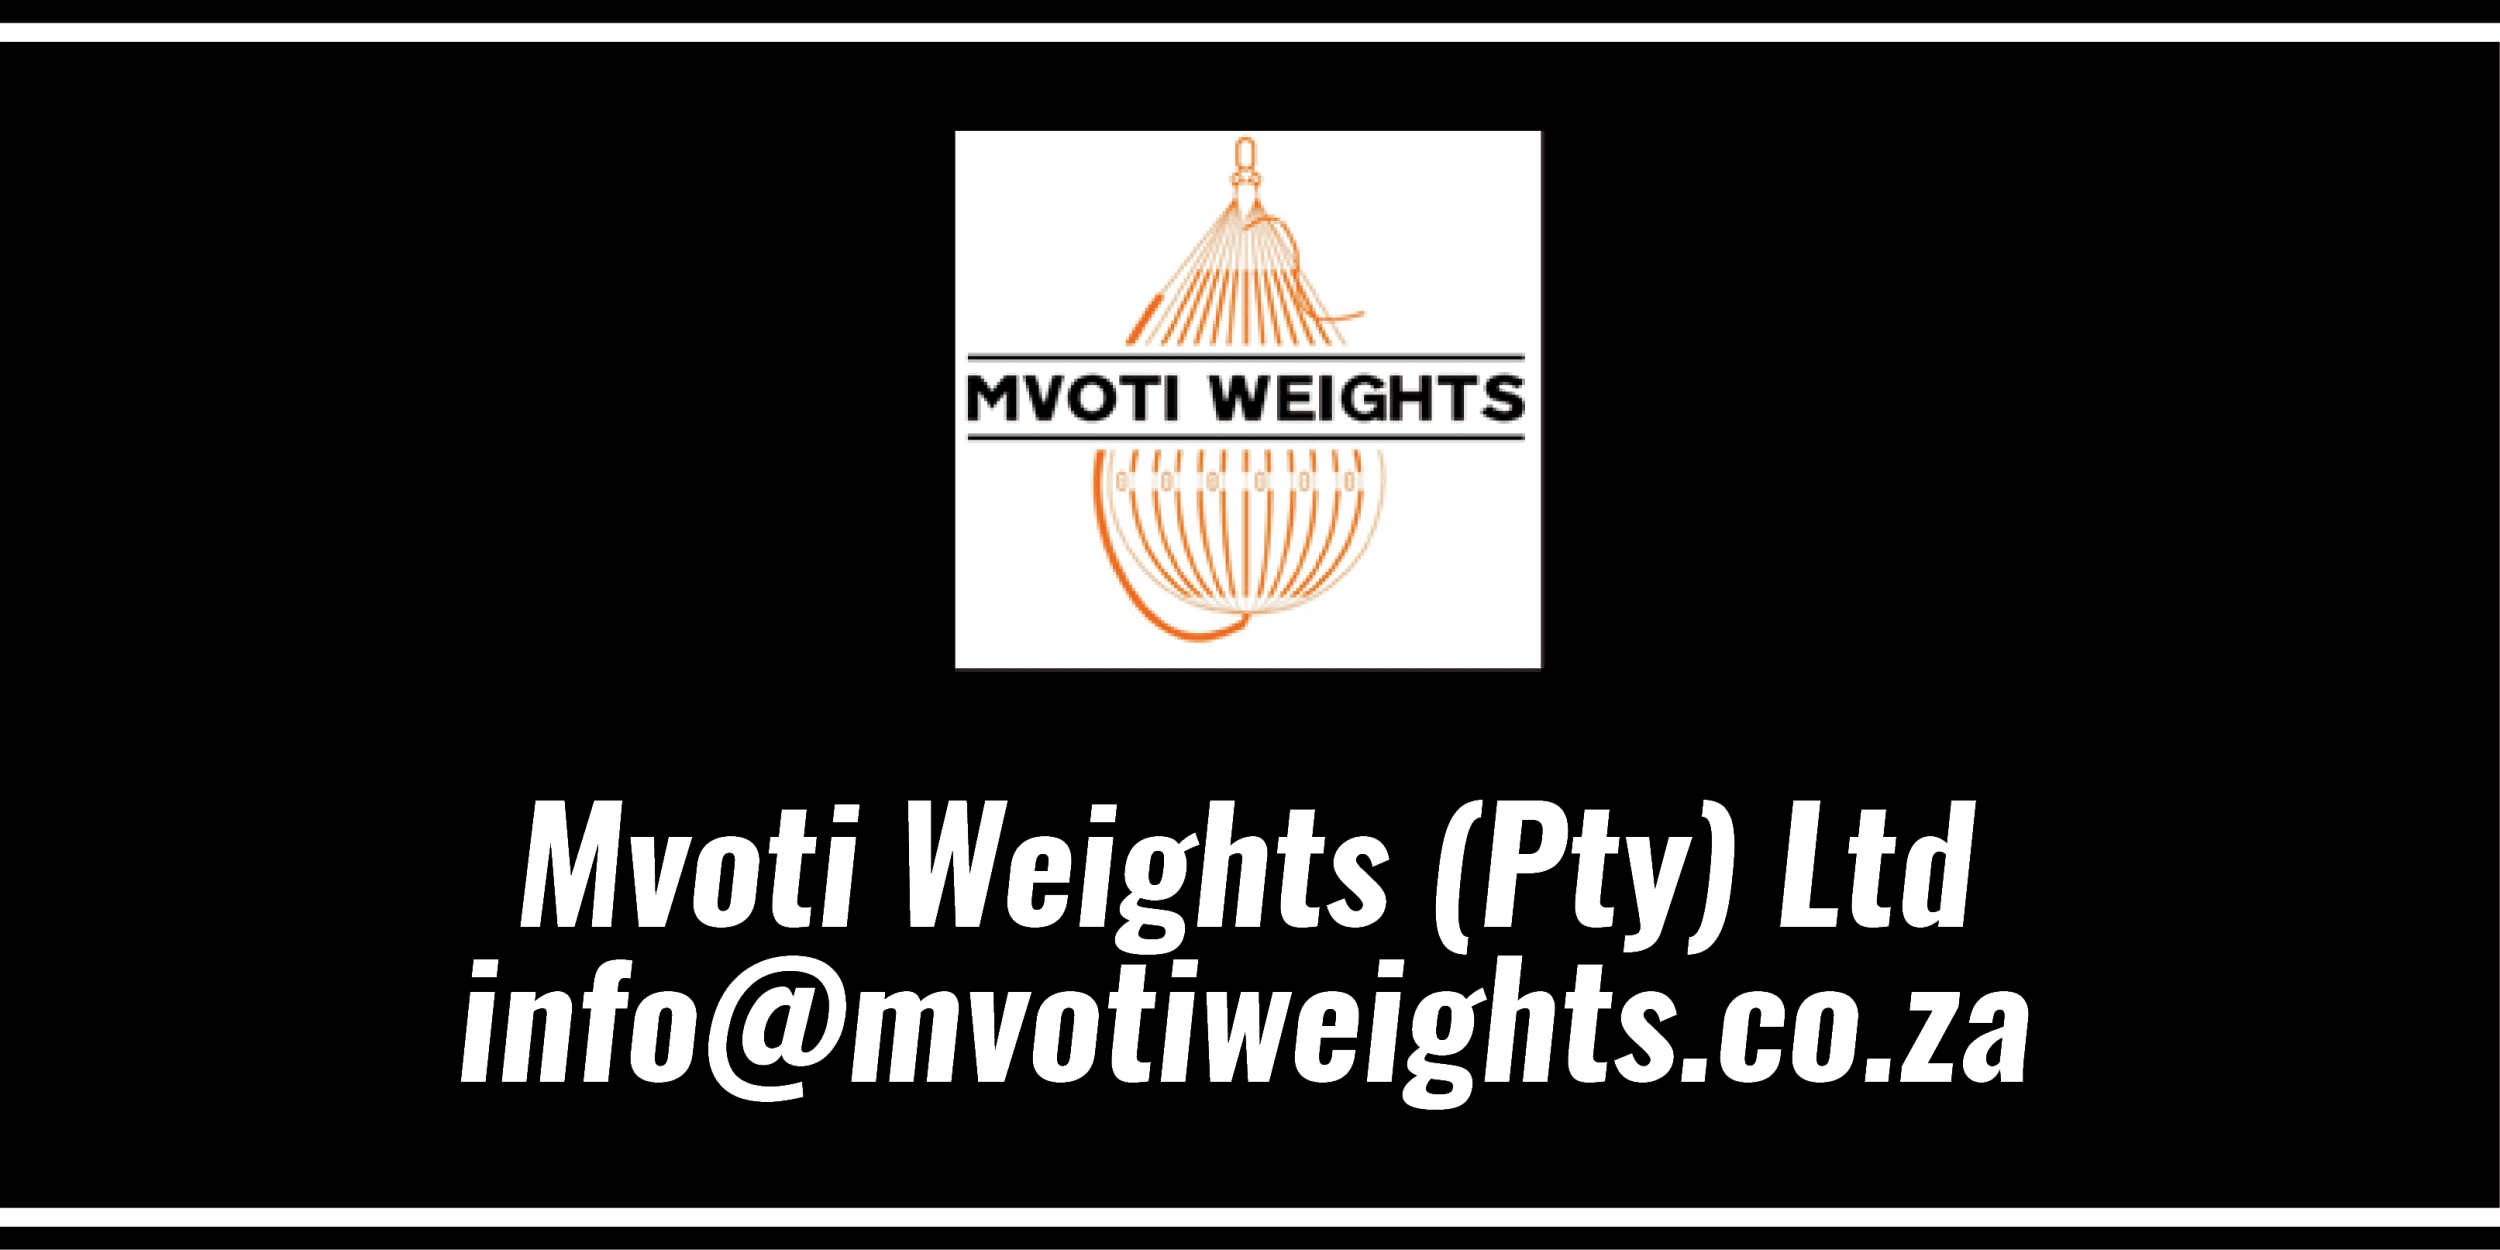 Mvoti Weights (Pty) Ltd